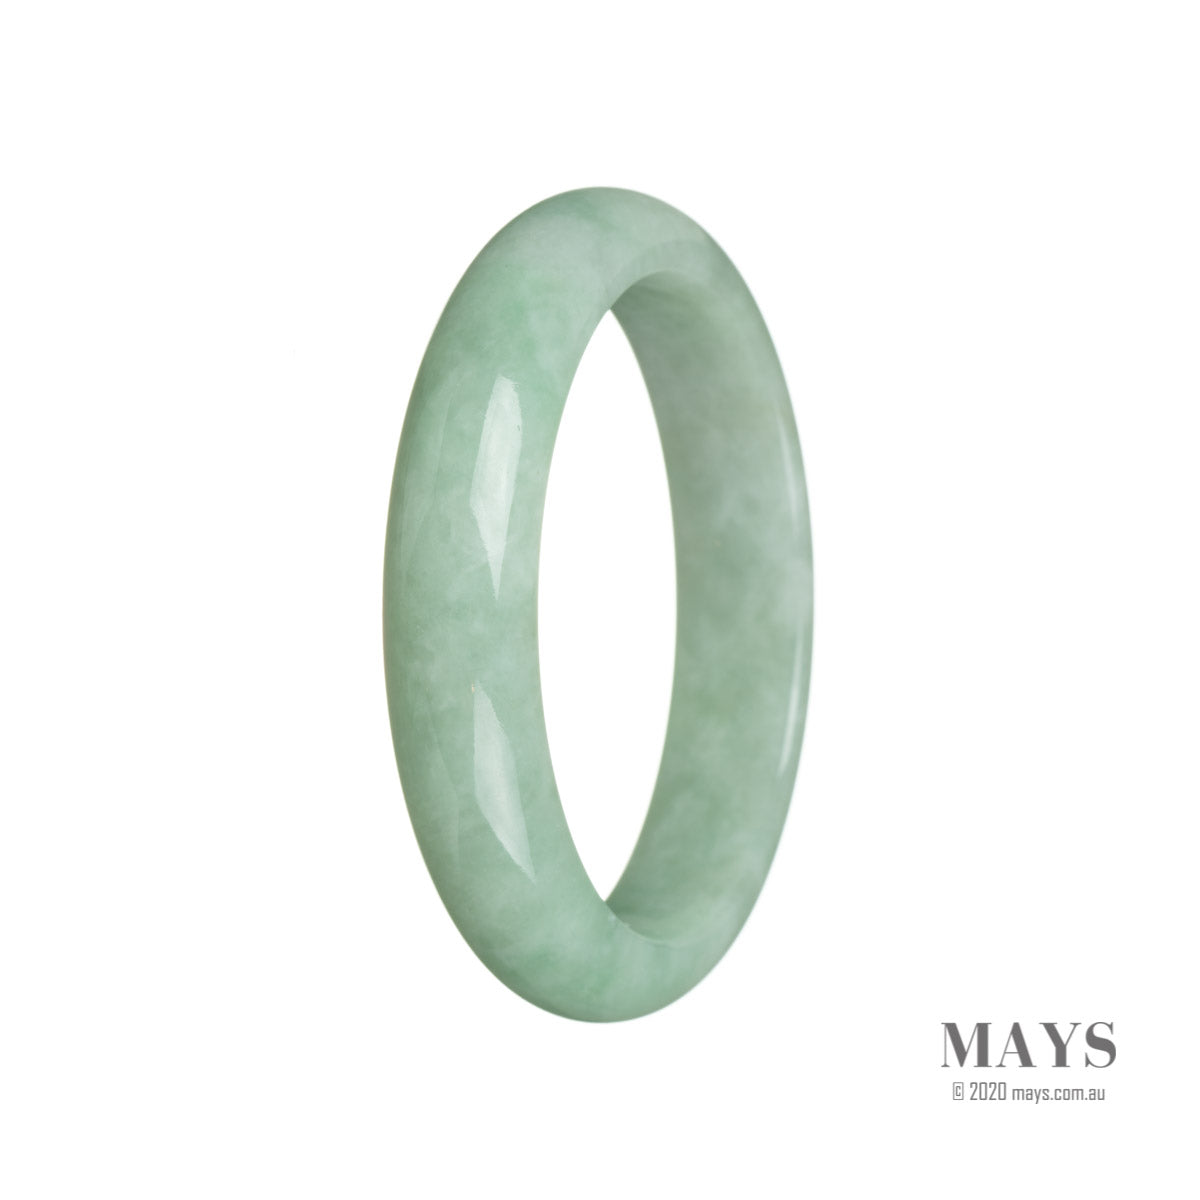 A light green jade bangle bracelet with a half-moon shape, made from genuine Grade A jadeite jade.